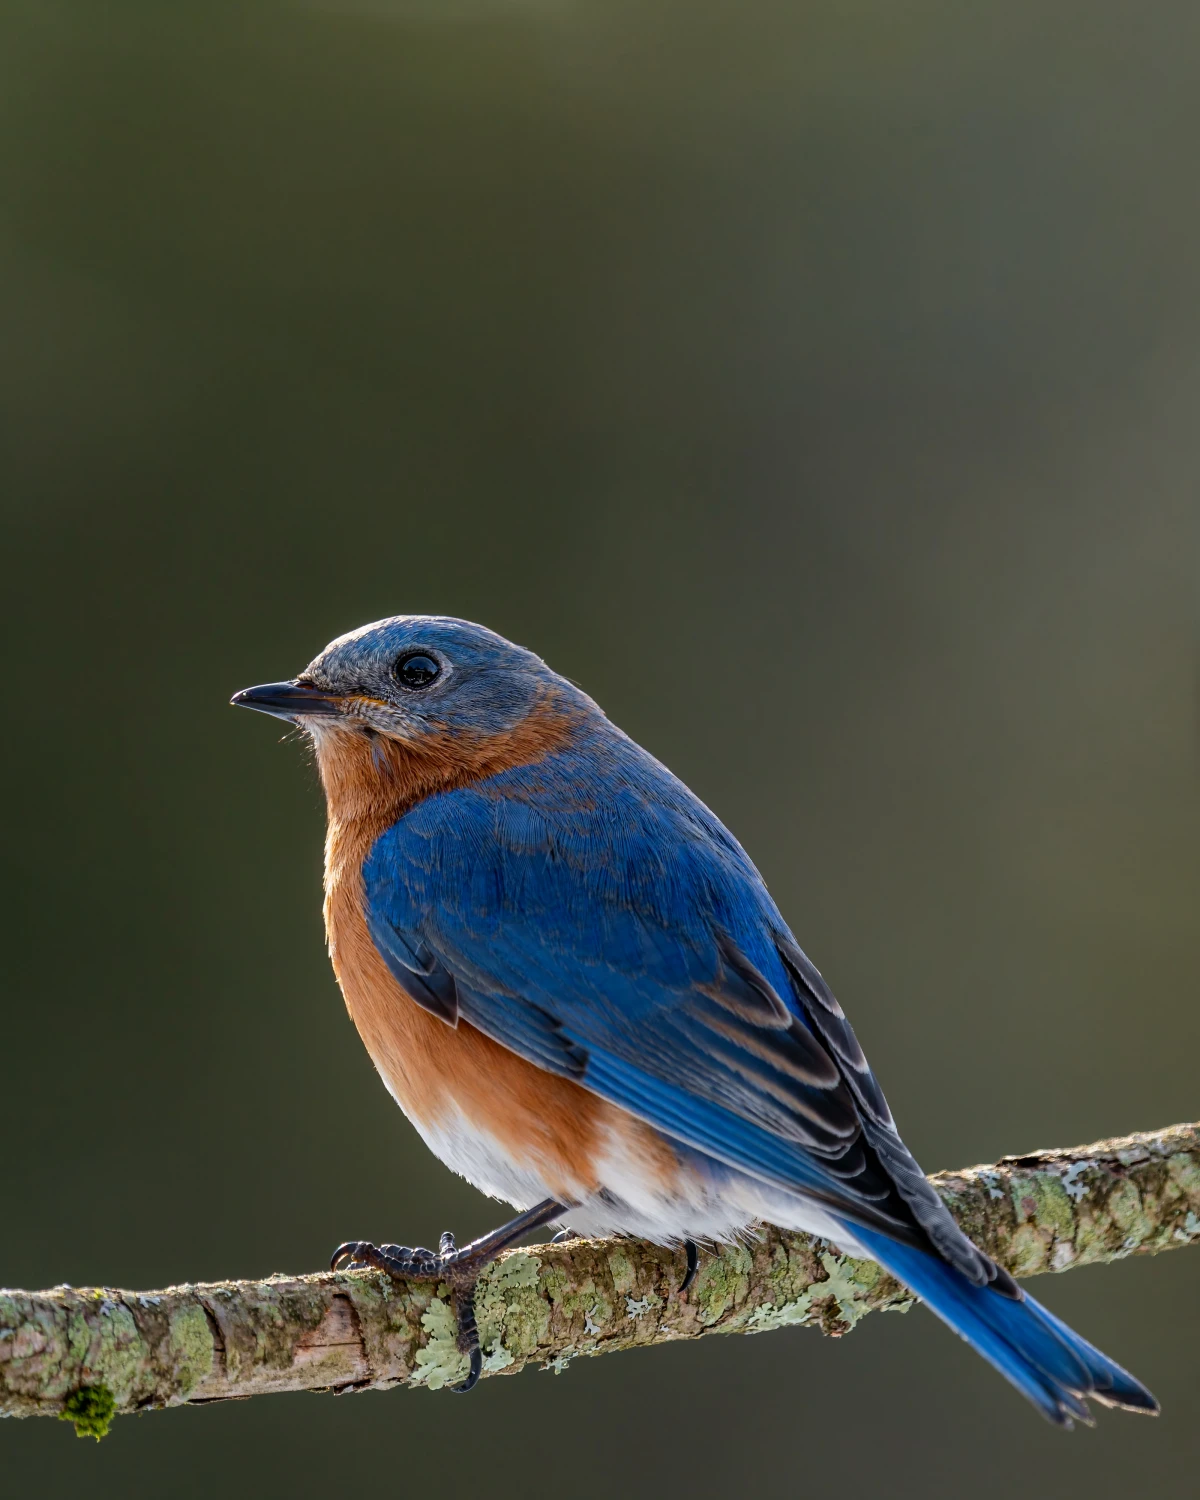 chunky bluebird on branch